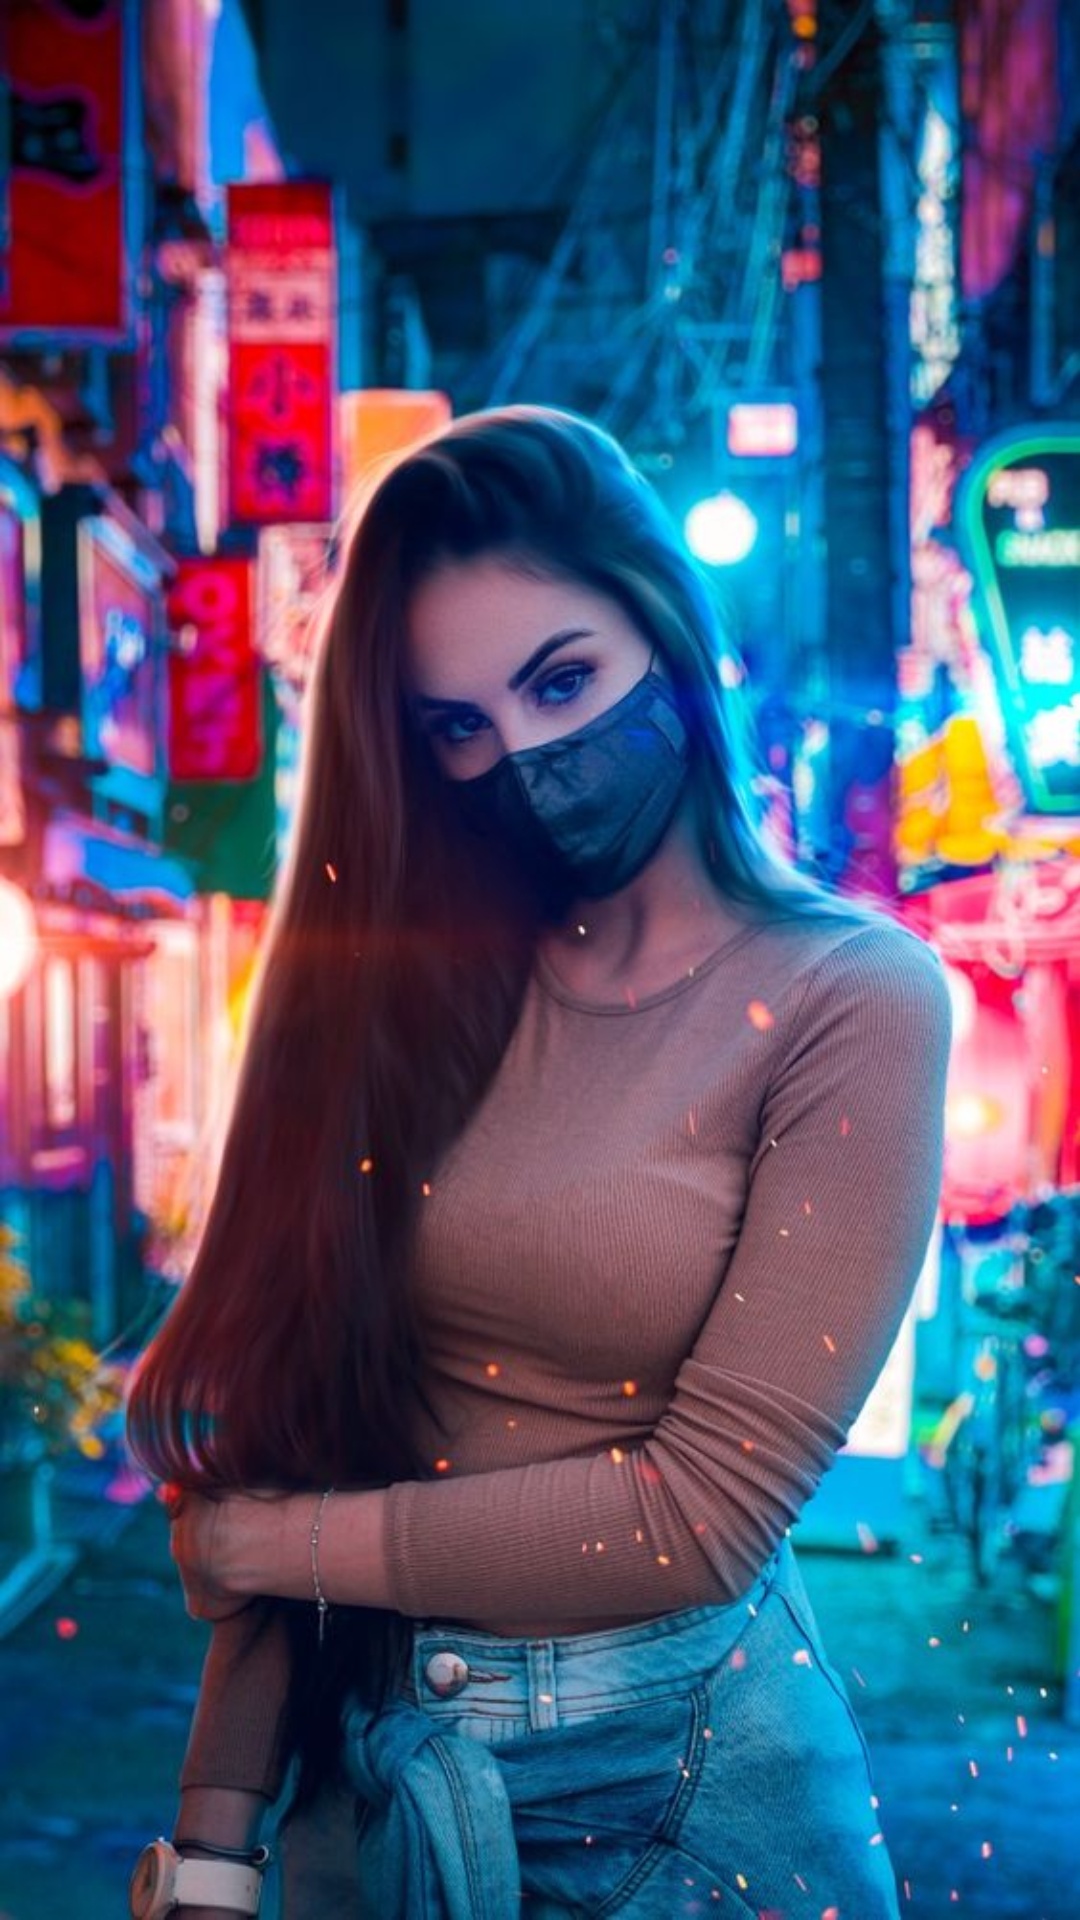 Neon Mask Girl Images